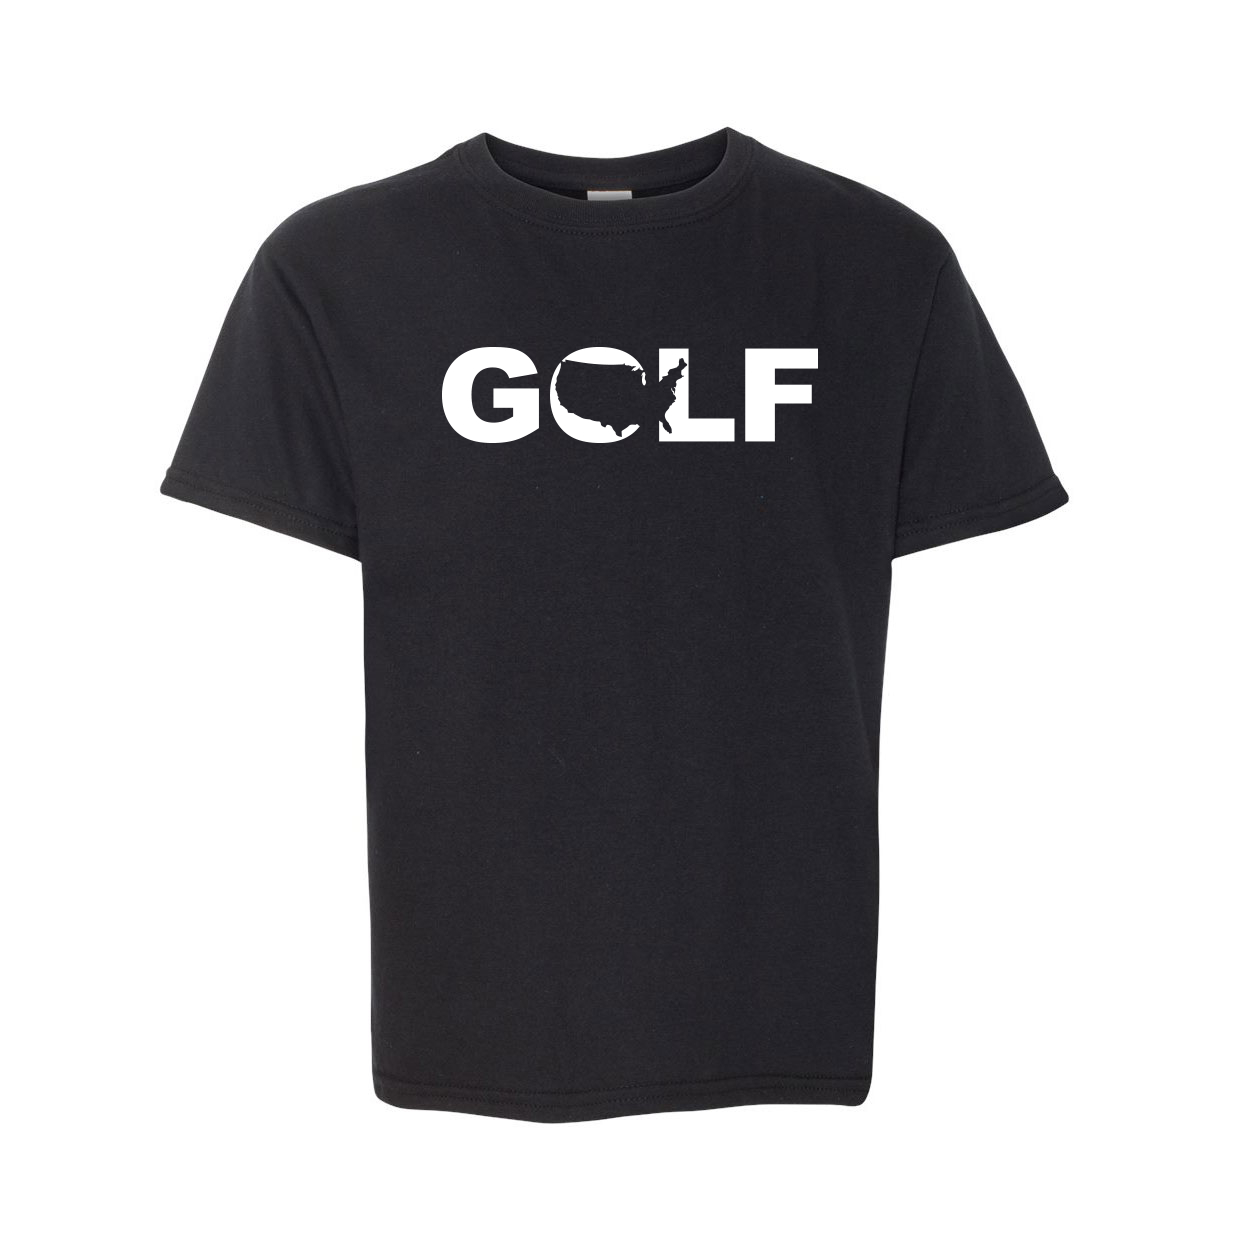 Golf United States Classic Youth T-Shirt Black (White Logo)